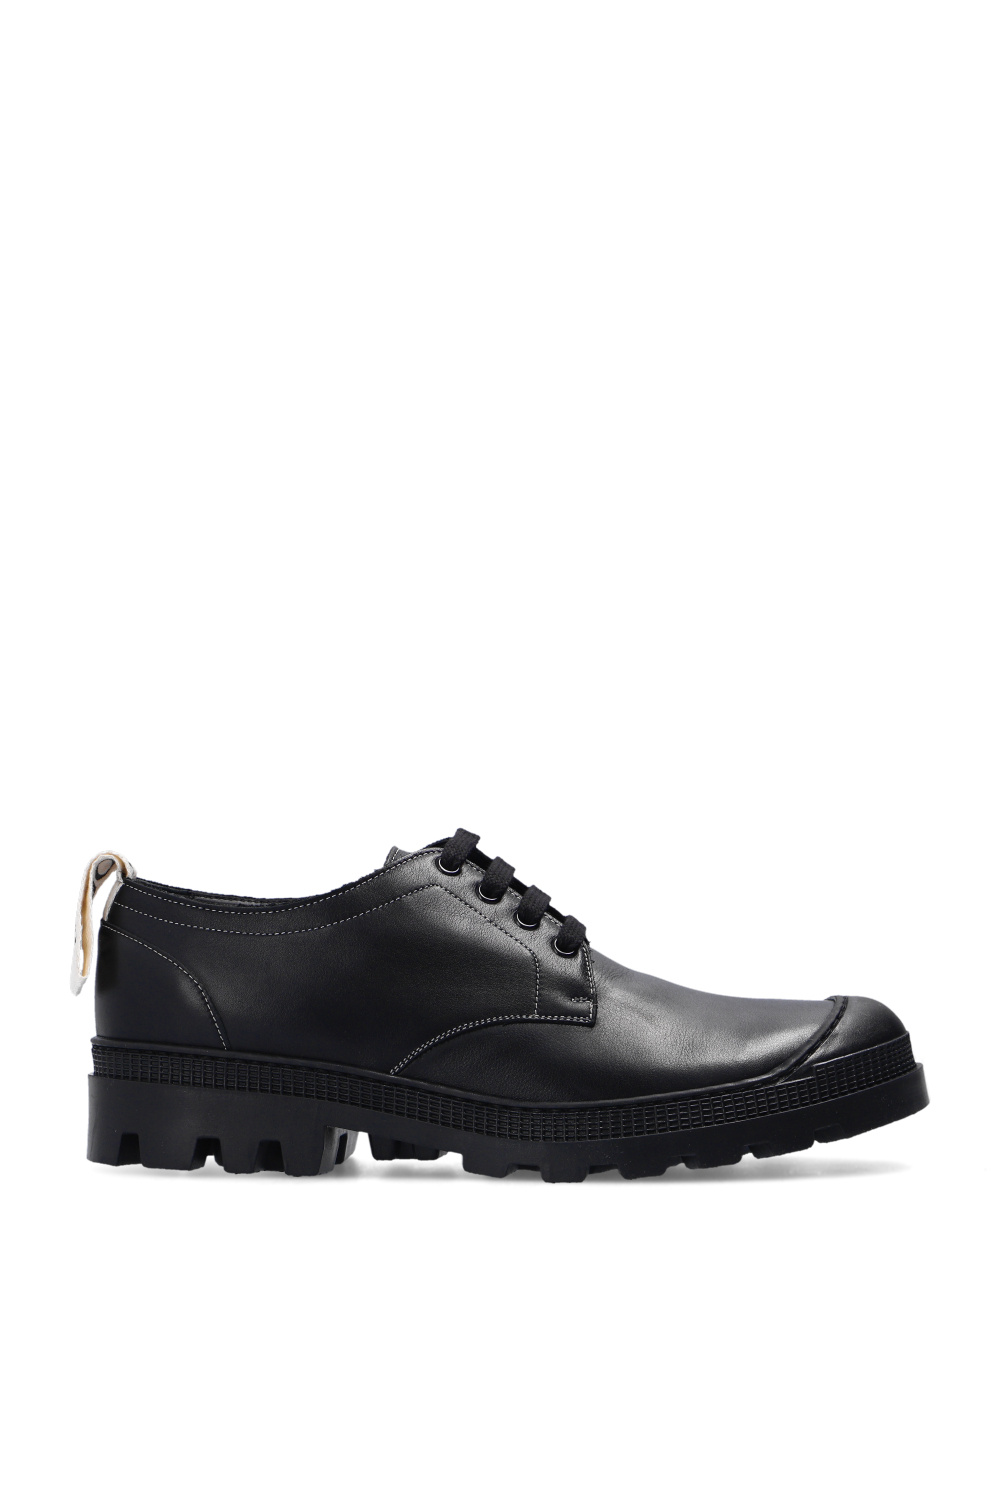 Loewe Leather shoes